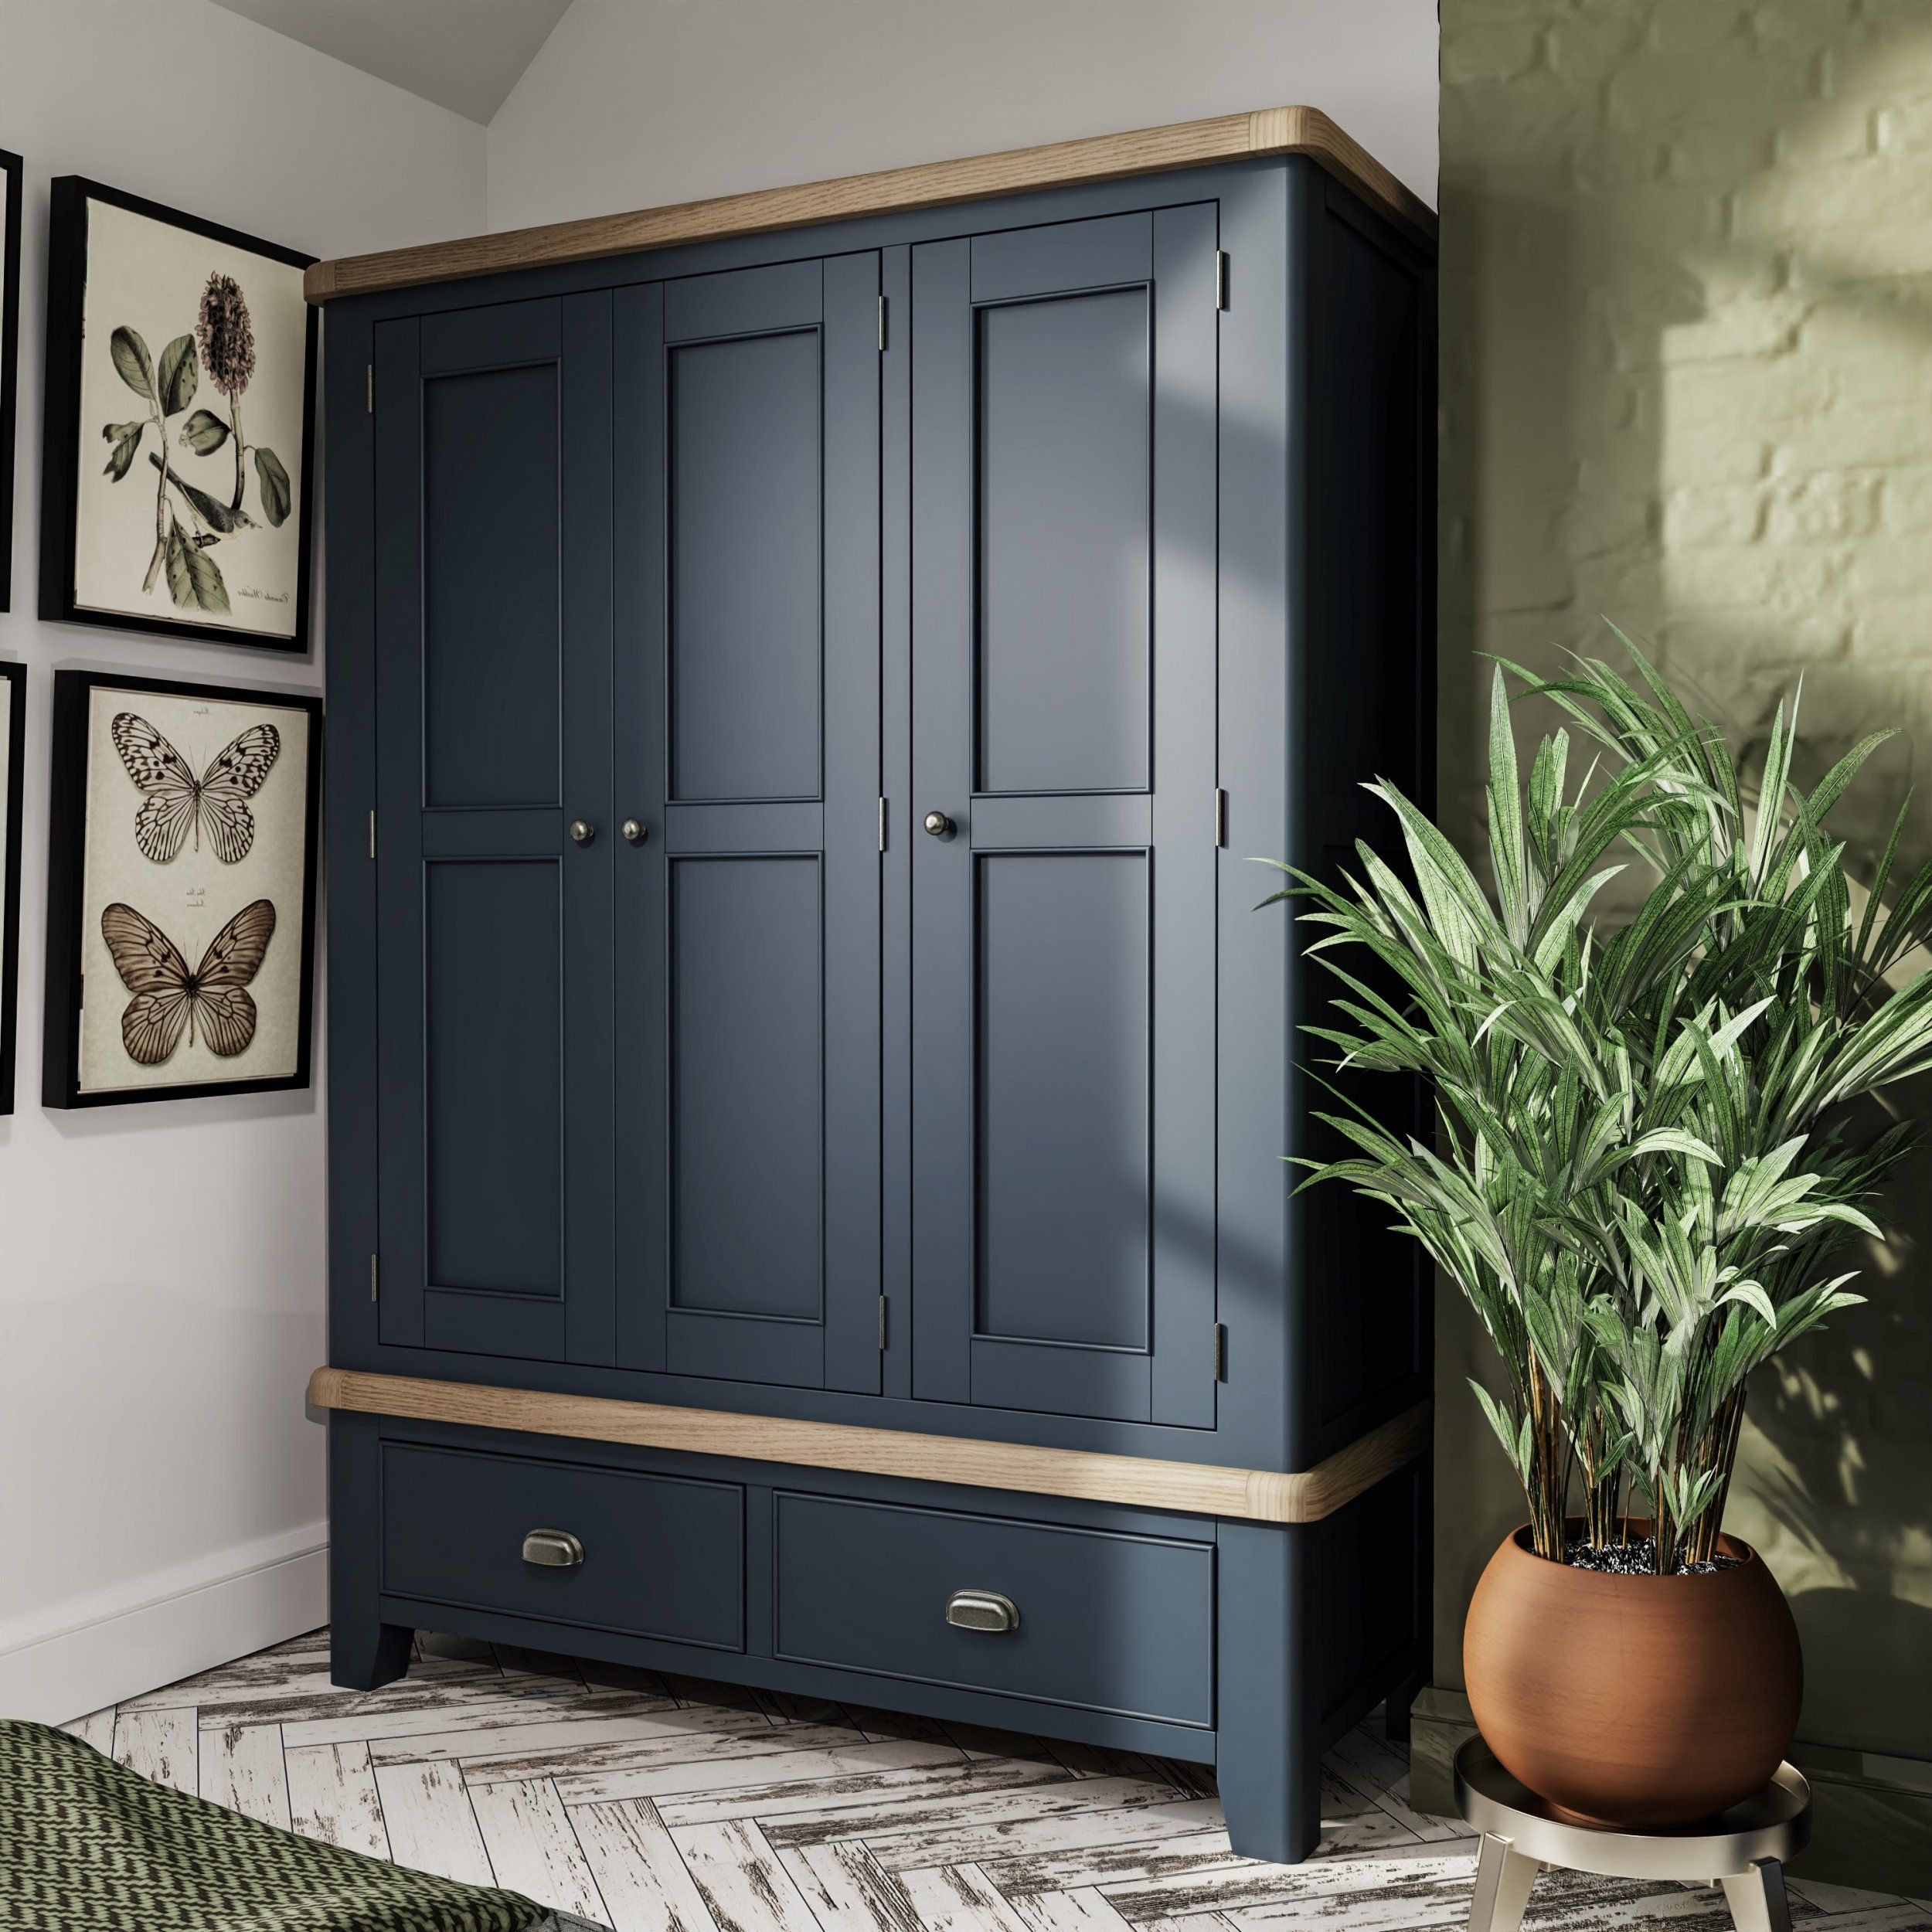 Haxby Oak Painted Bedroom 3 Door Wardrobe – Blue | The Clearance Zone Intended For Oak 3 Door Wardrobes (View 14 of 15)